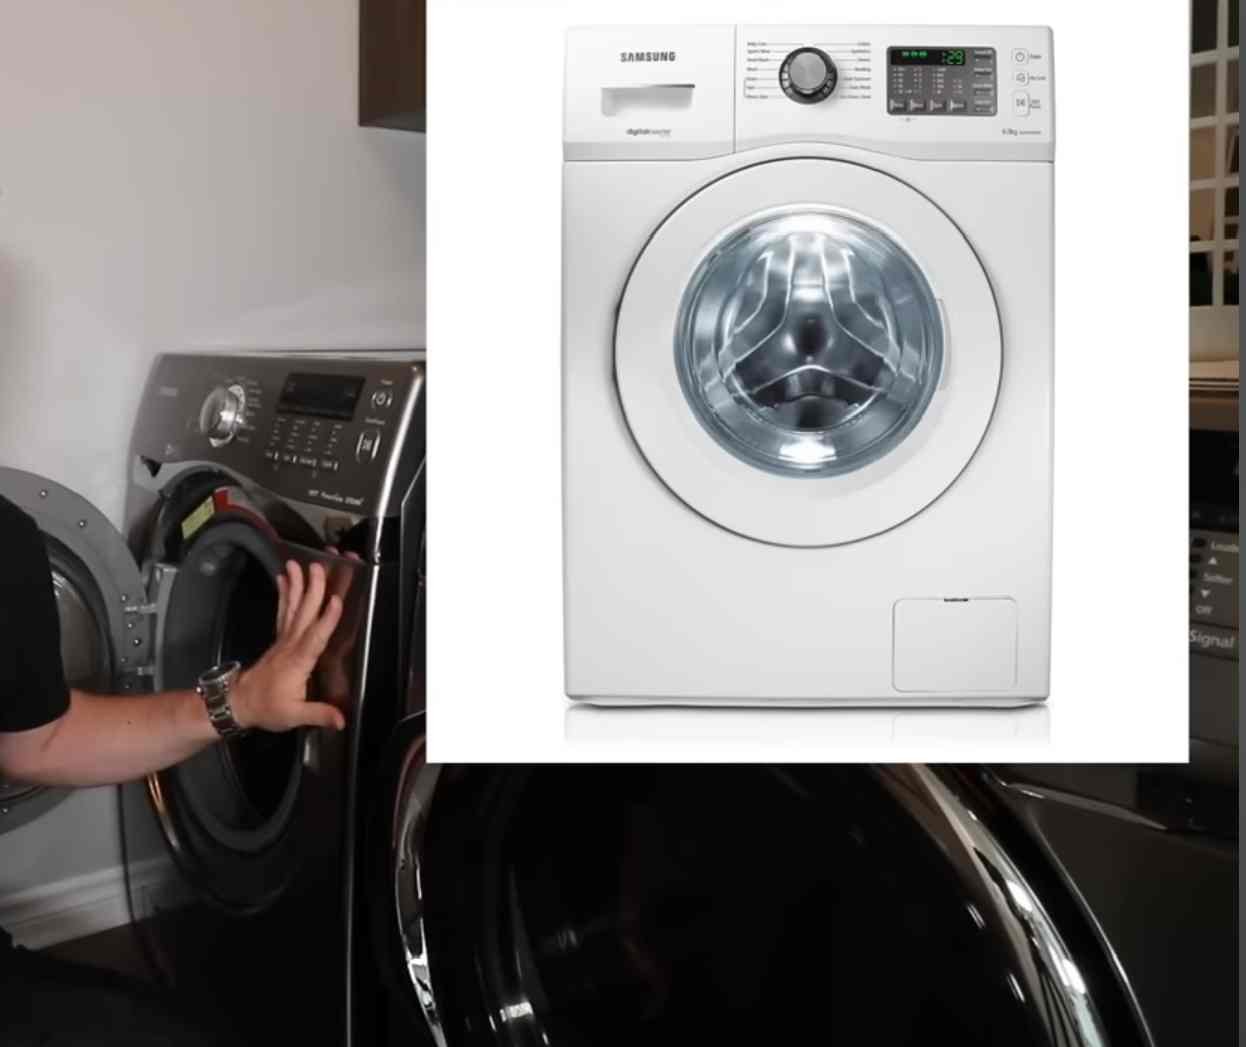 How to deep clean a washing machine